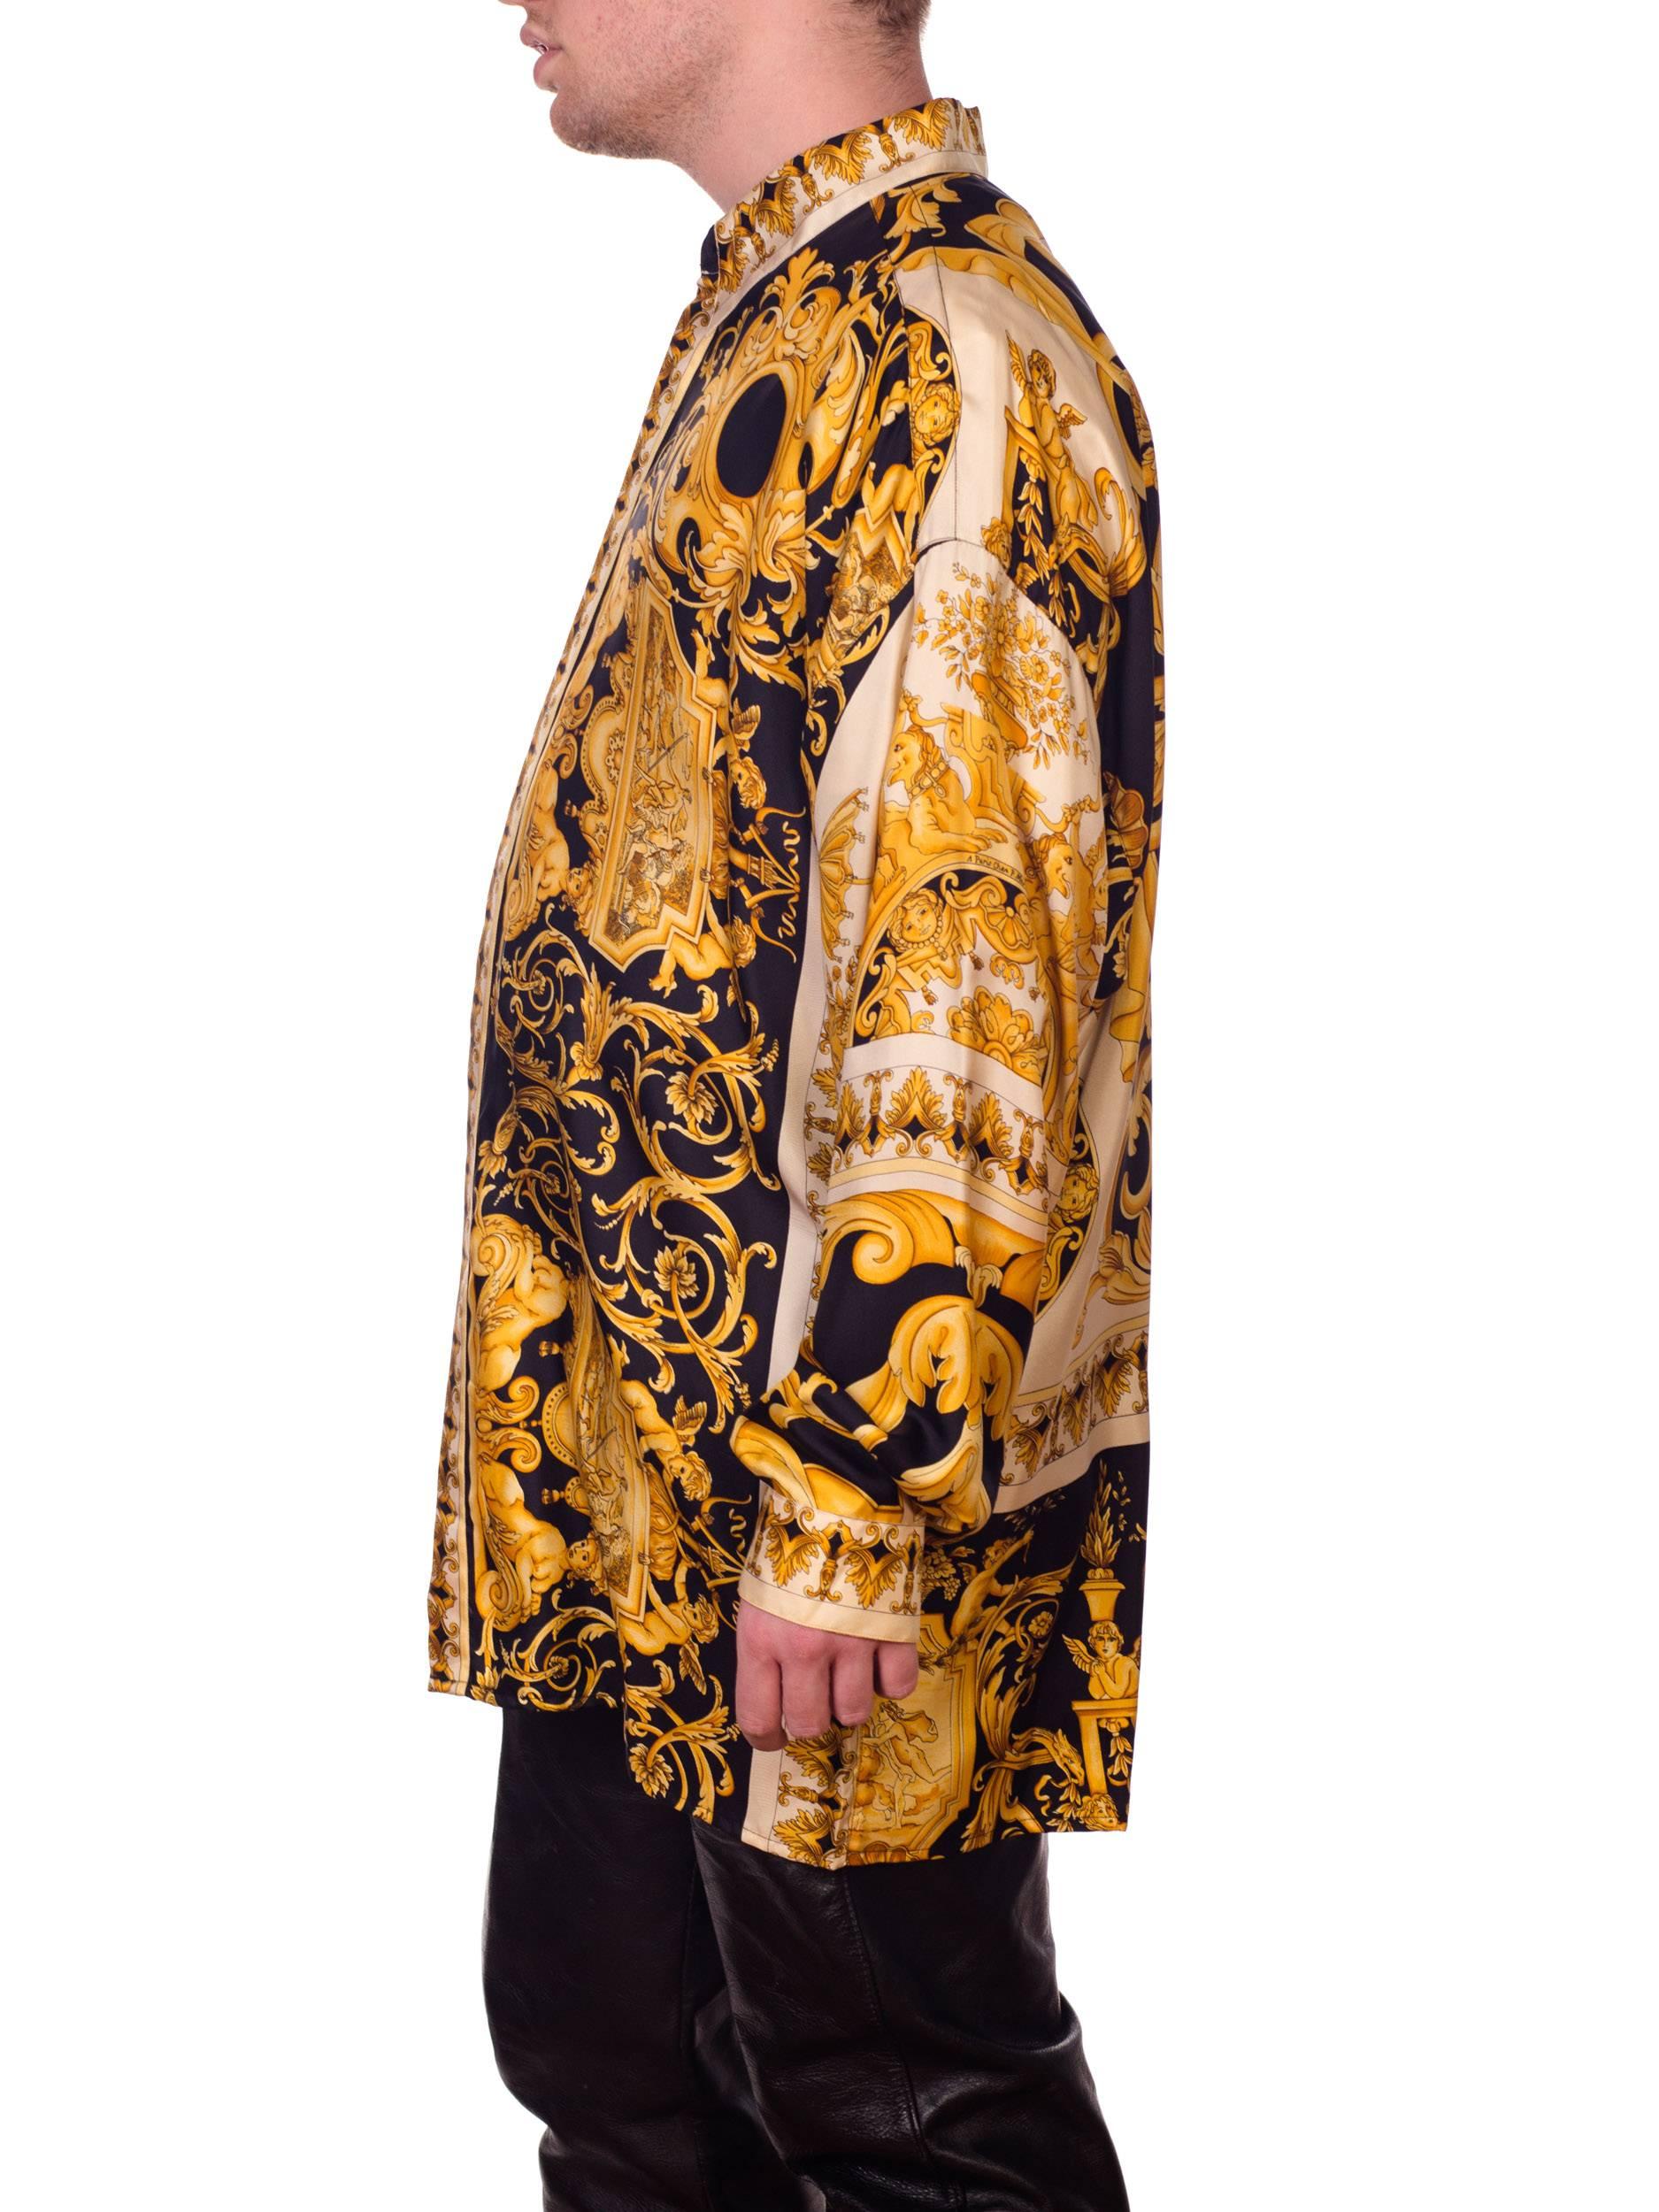 Atelier Gianni Versace Silk Gold Filigree Shirt, 1990s  2